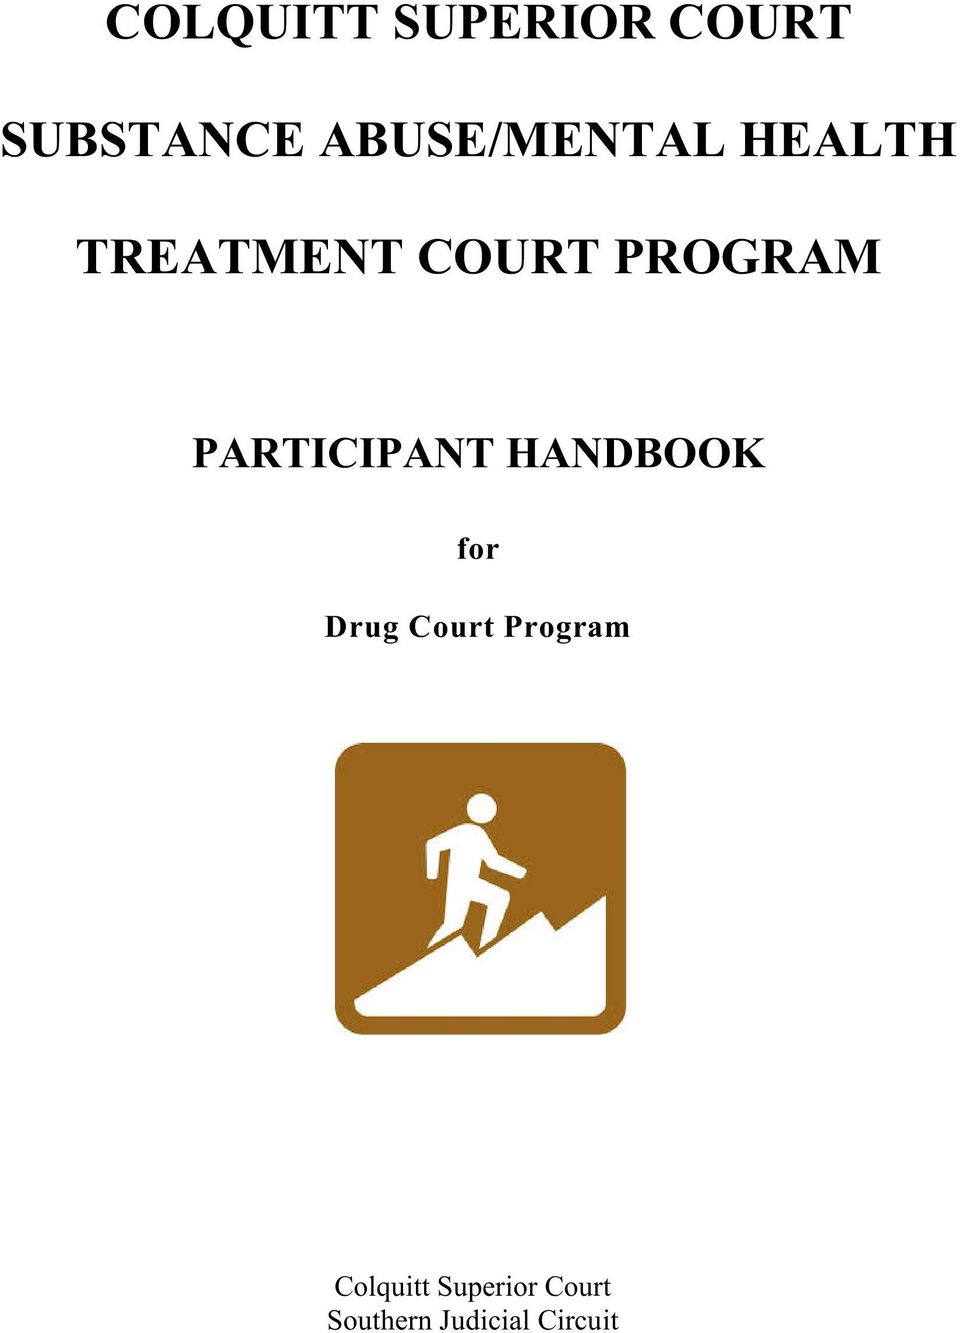 PROGRAM PARTICIPANT HANDBOOK for Drug